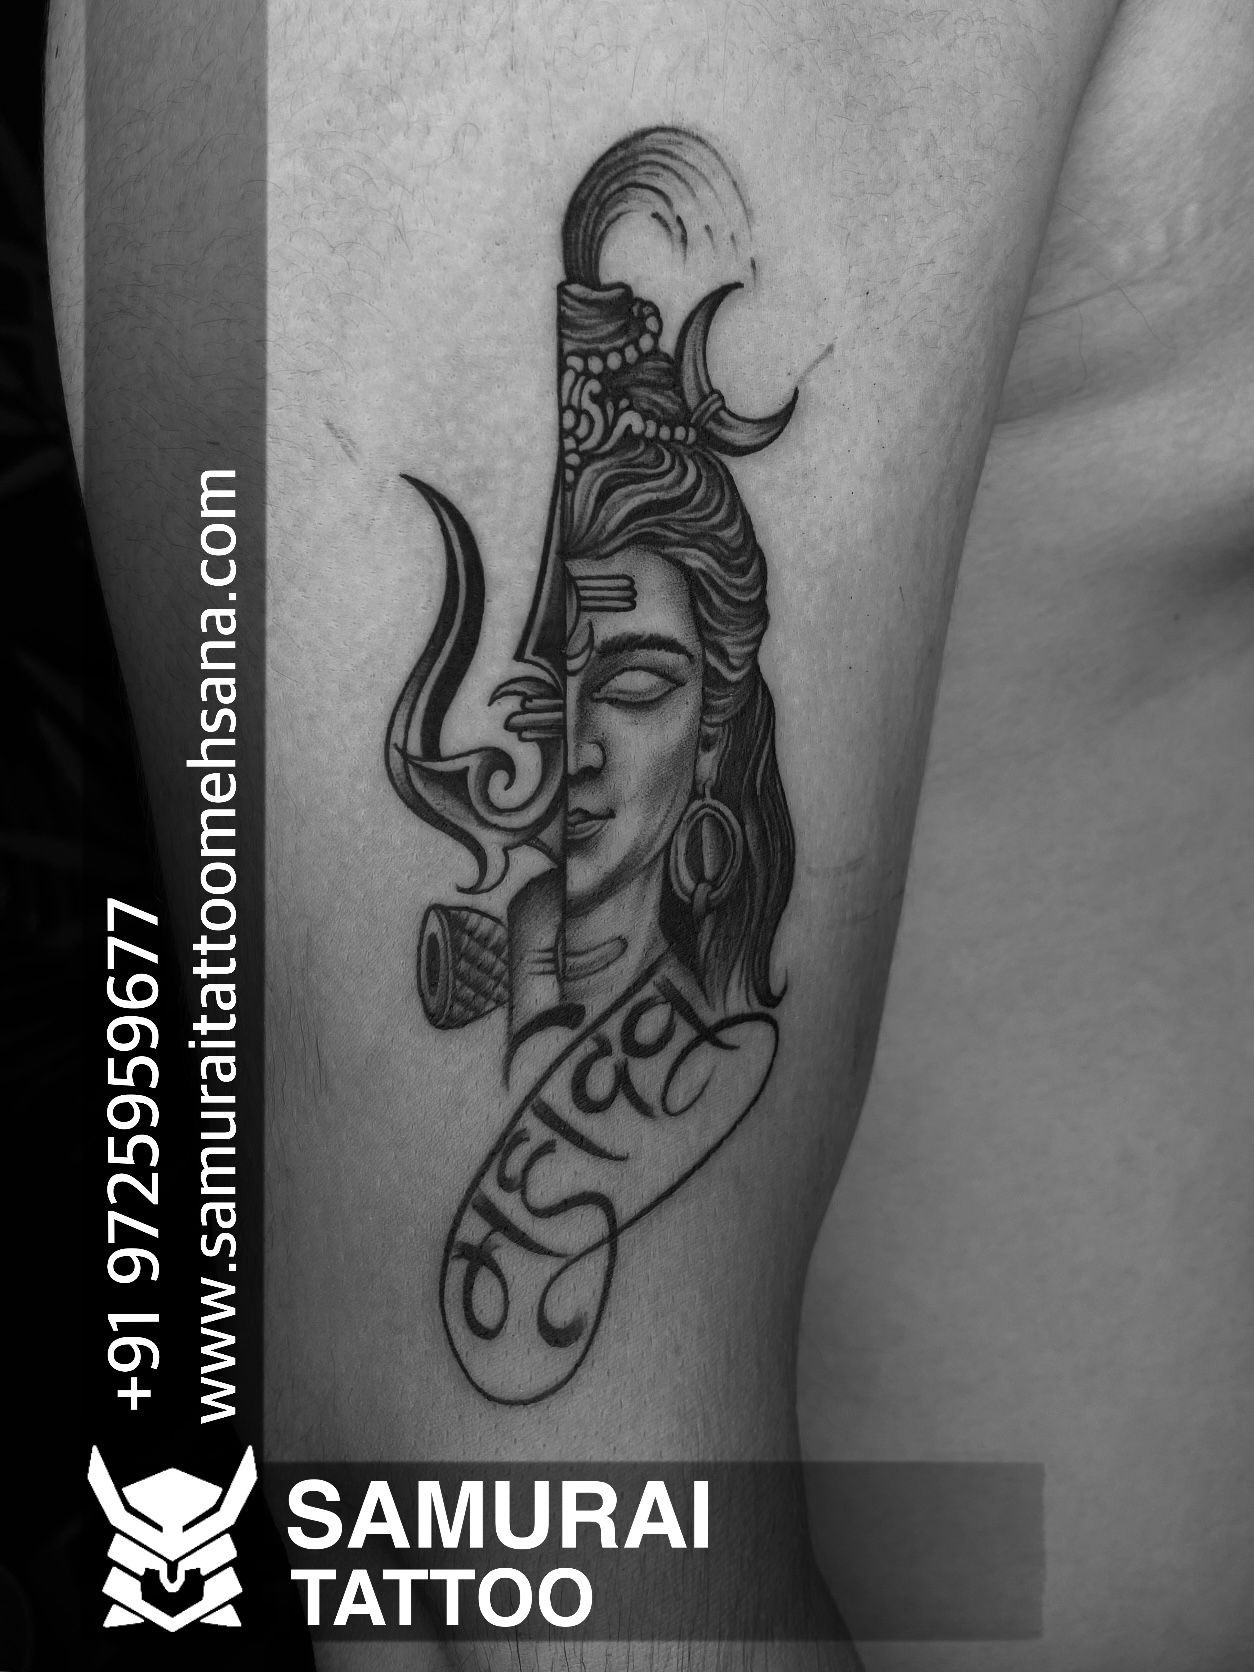 Mahadev tattoo design Images • ᵐˢ┼͢🅰νиɪ✺⃟𝄞 (@ishavni) on ShareChat